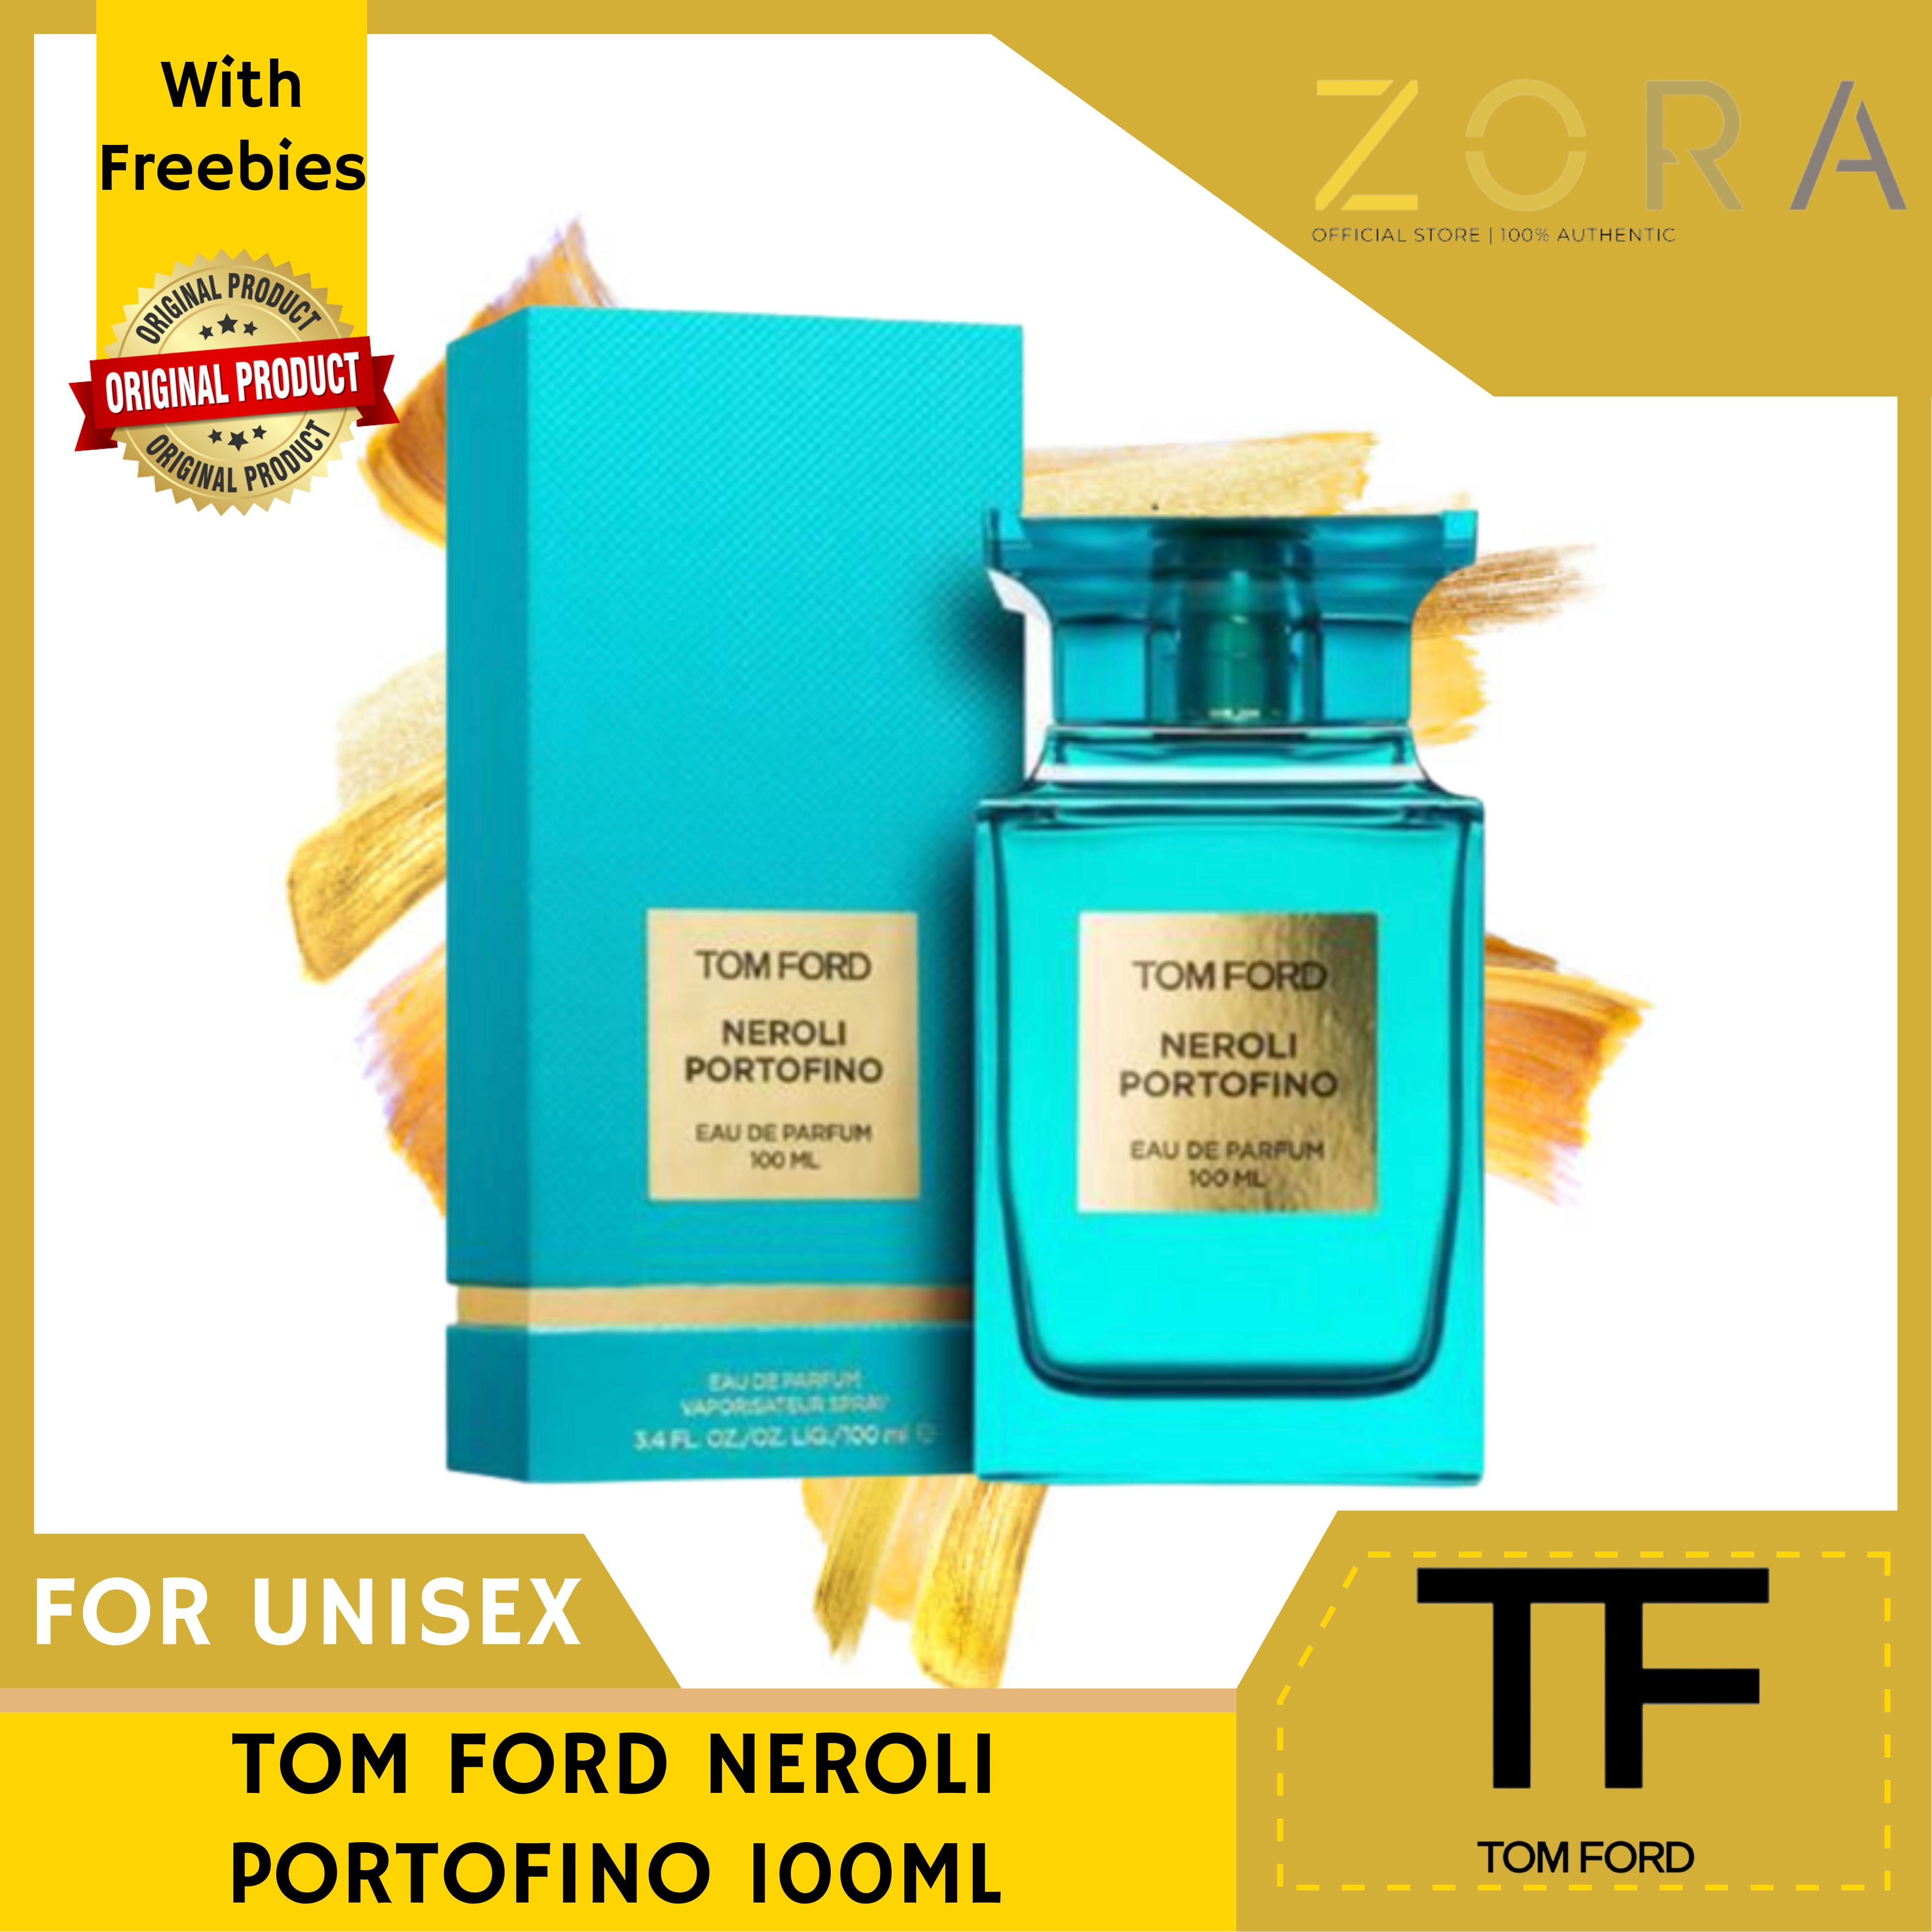 ZORA PH TOM FORD NEROLI PORTOFINO Eau De Parfum 100ml perfume for women |  Oil Based perfume for women original | bath and body works perfume |  perfume dessert | perfume long